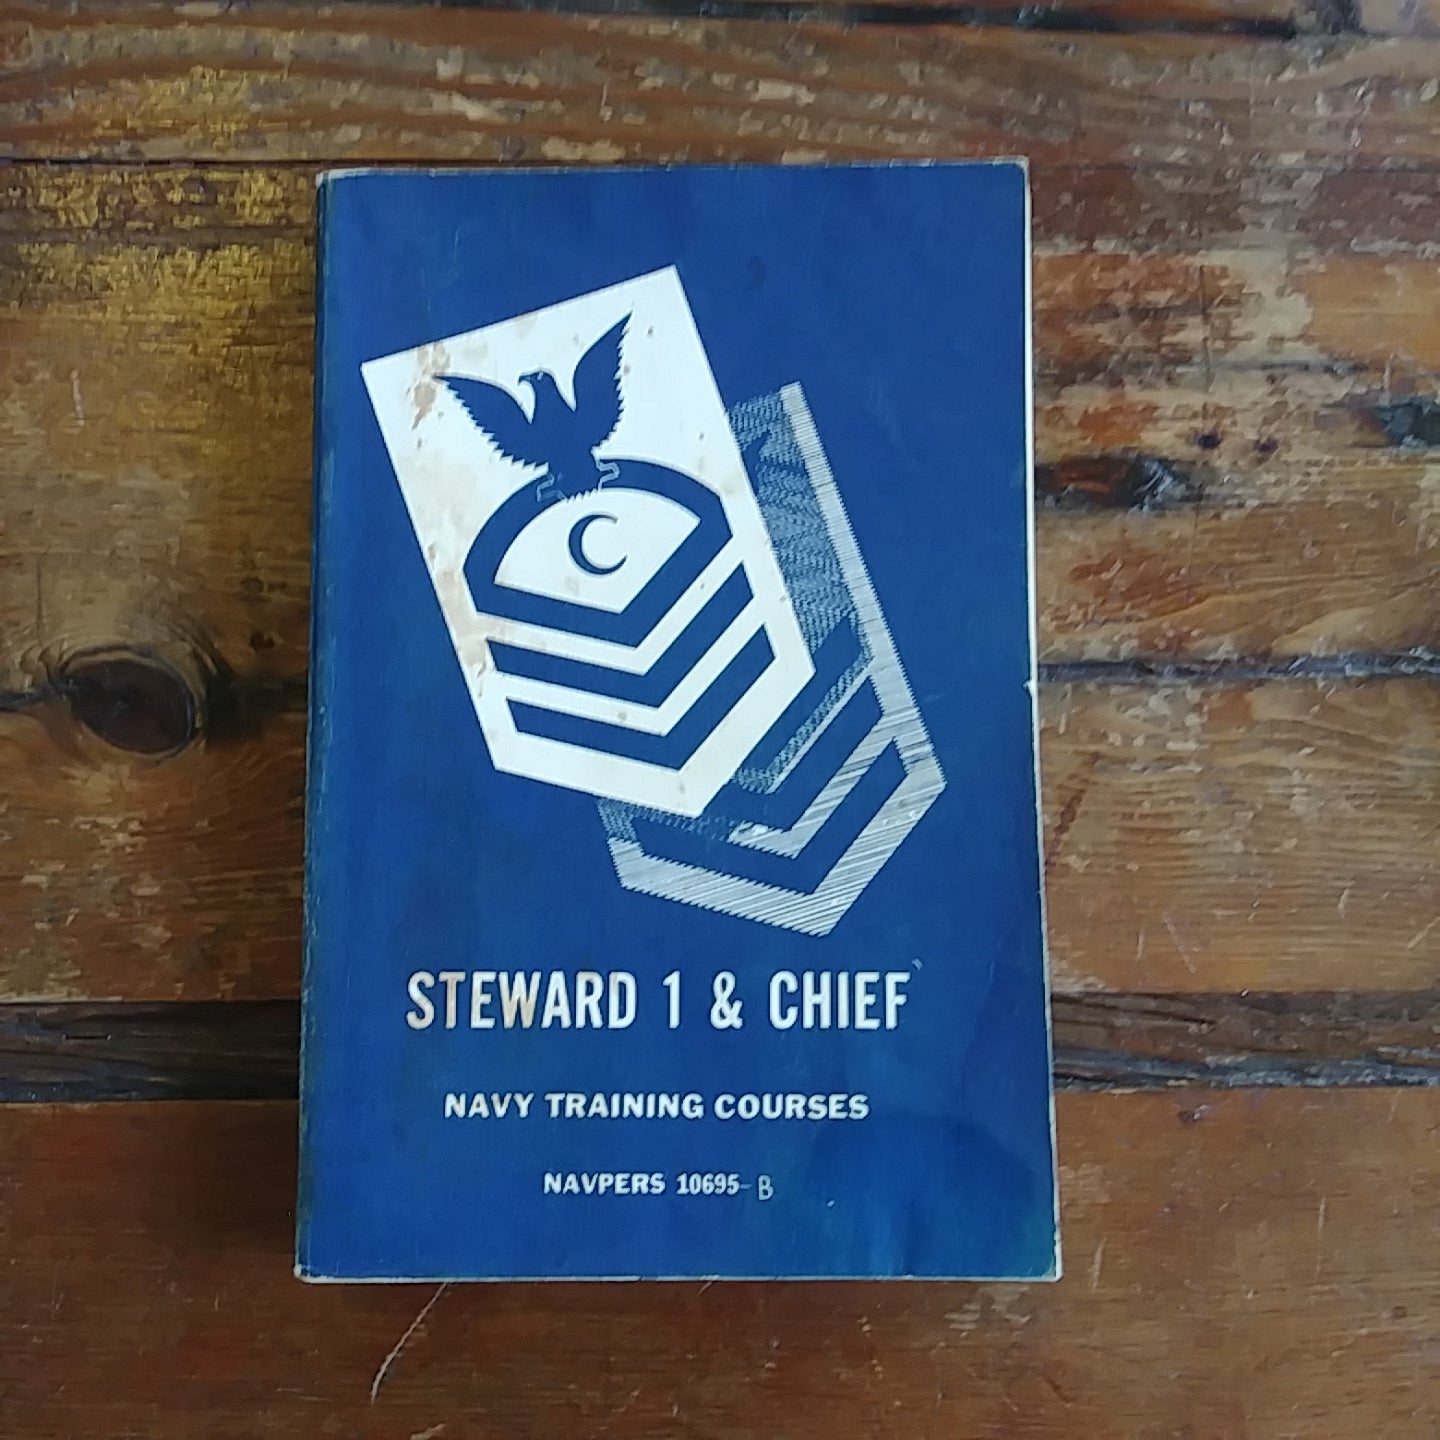 Book, "Steward 1 & Chief - Navy Training Courses"